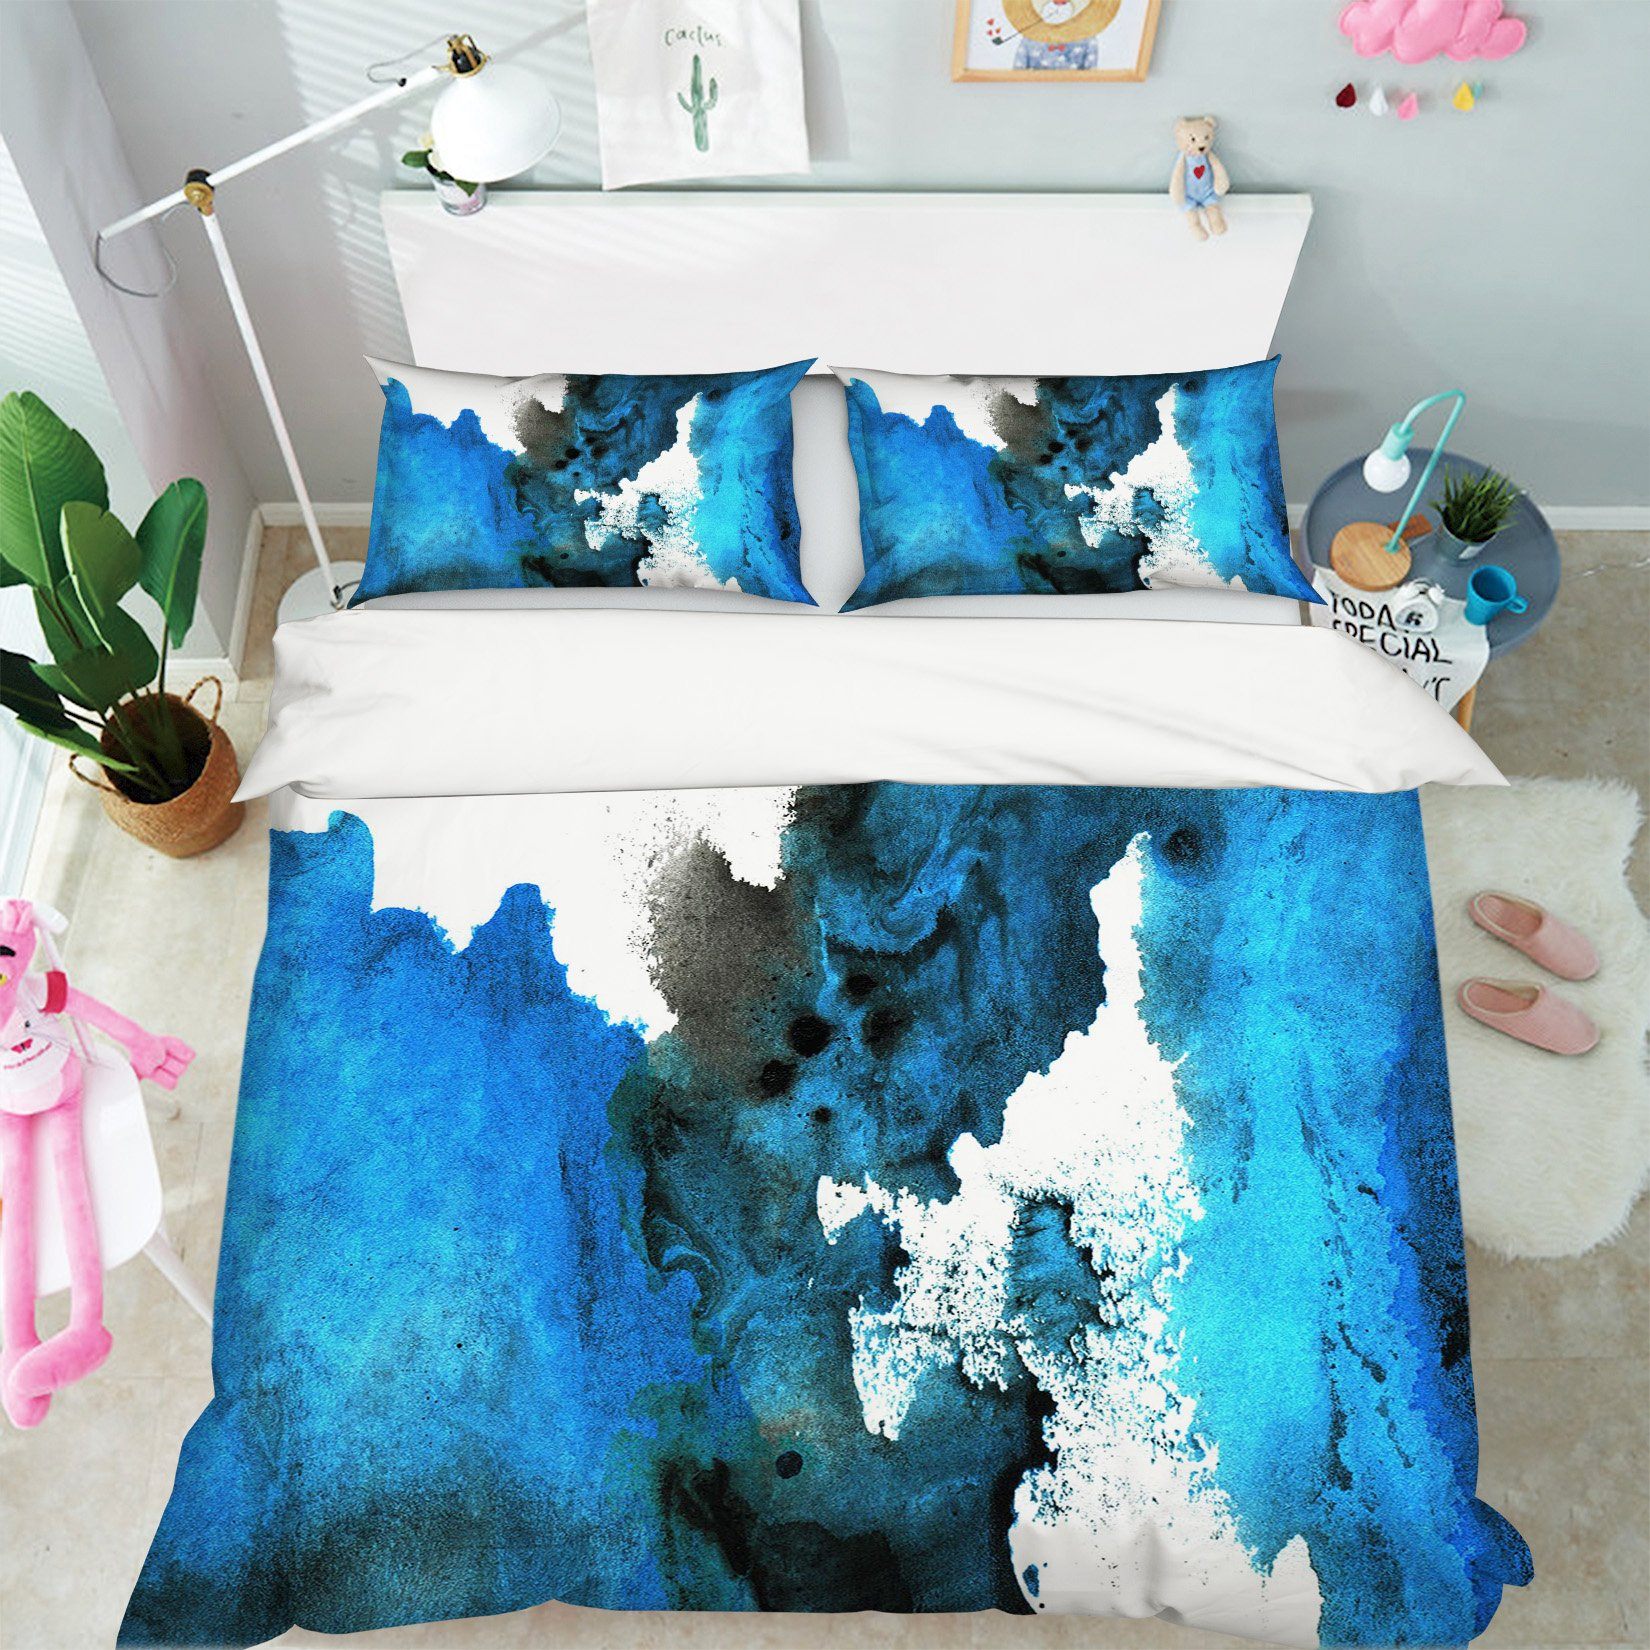 3D Apply Dark Blue 036 Bed Pillowcases Quilt Wallpaper AJ Wallpaper 